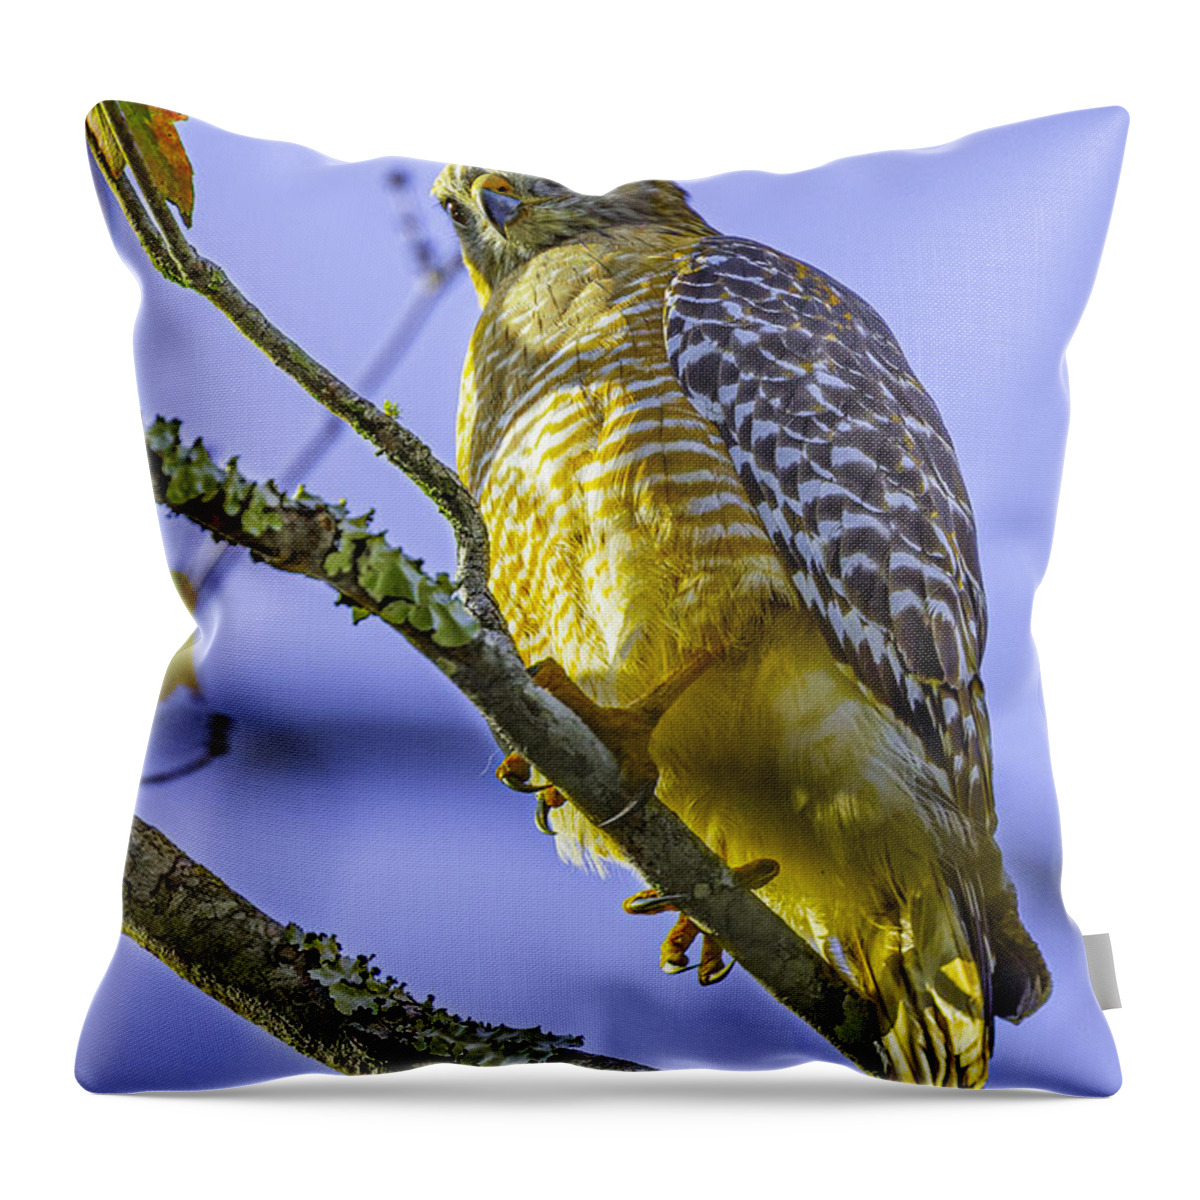 Bird Of Prey Throw Pillow featuring the photograph Bird of Prey by Gordon Elwell